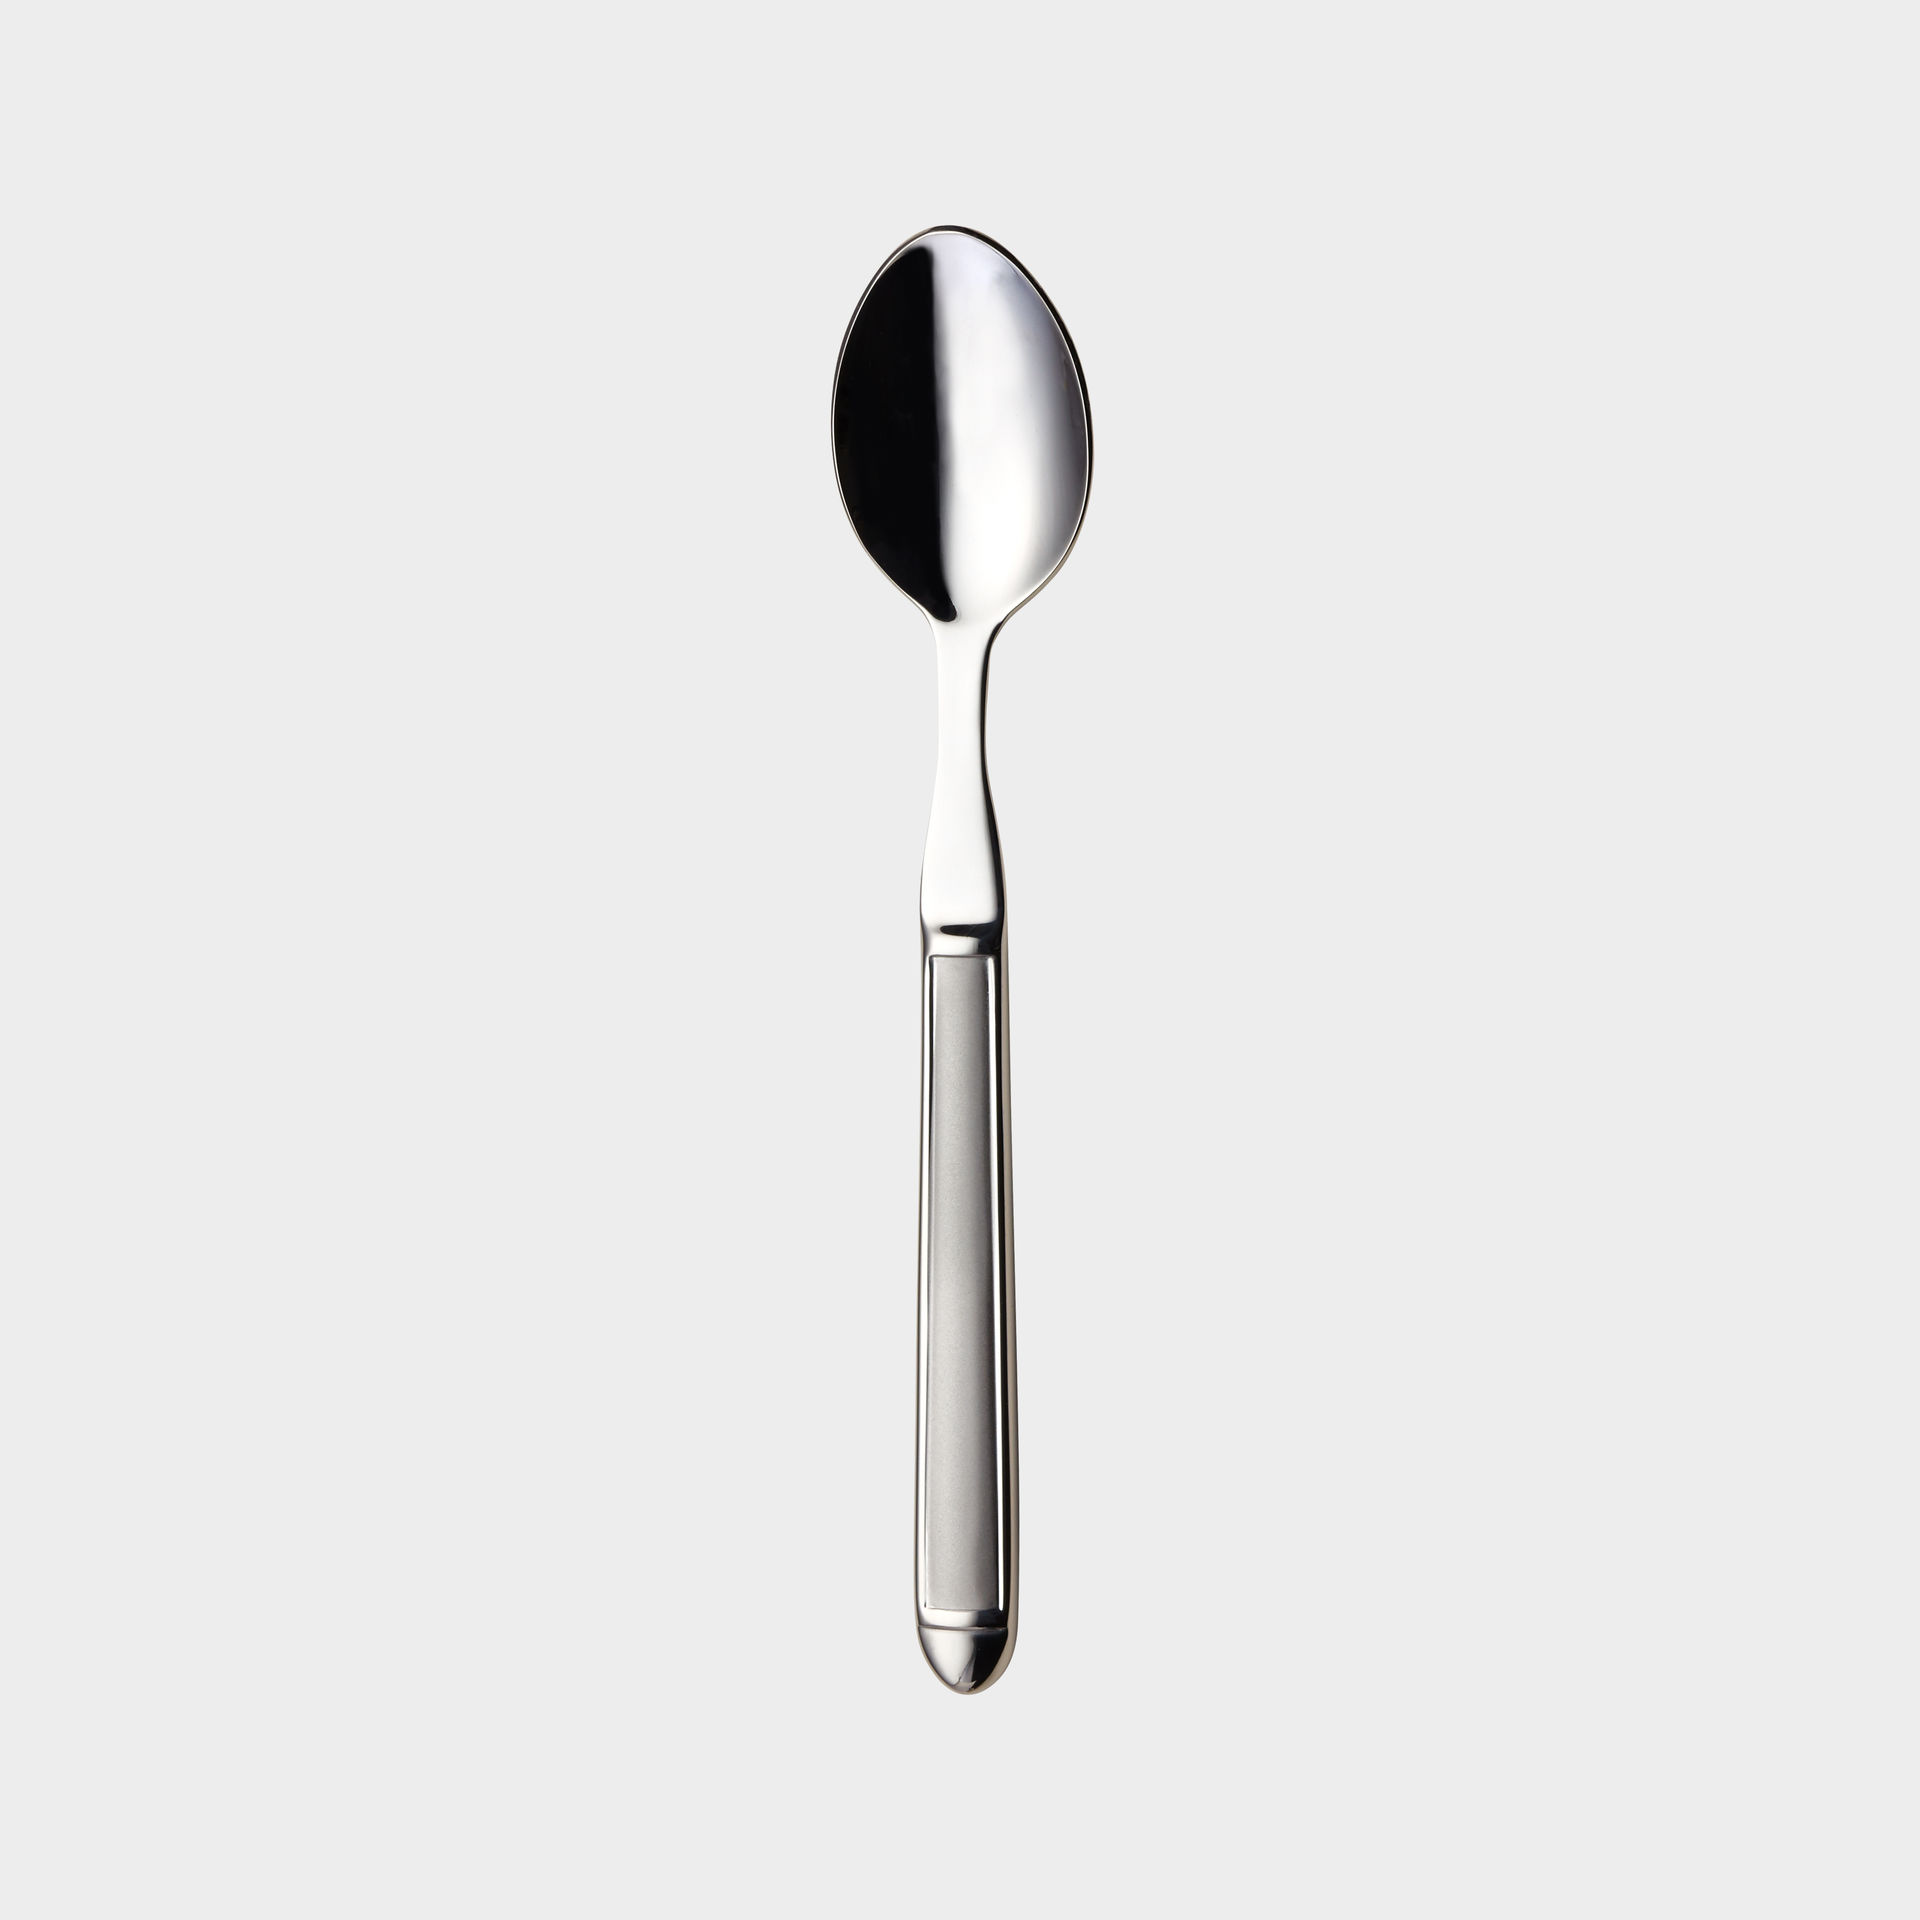 Nora dessert spoon product image